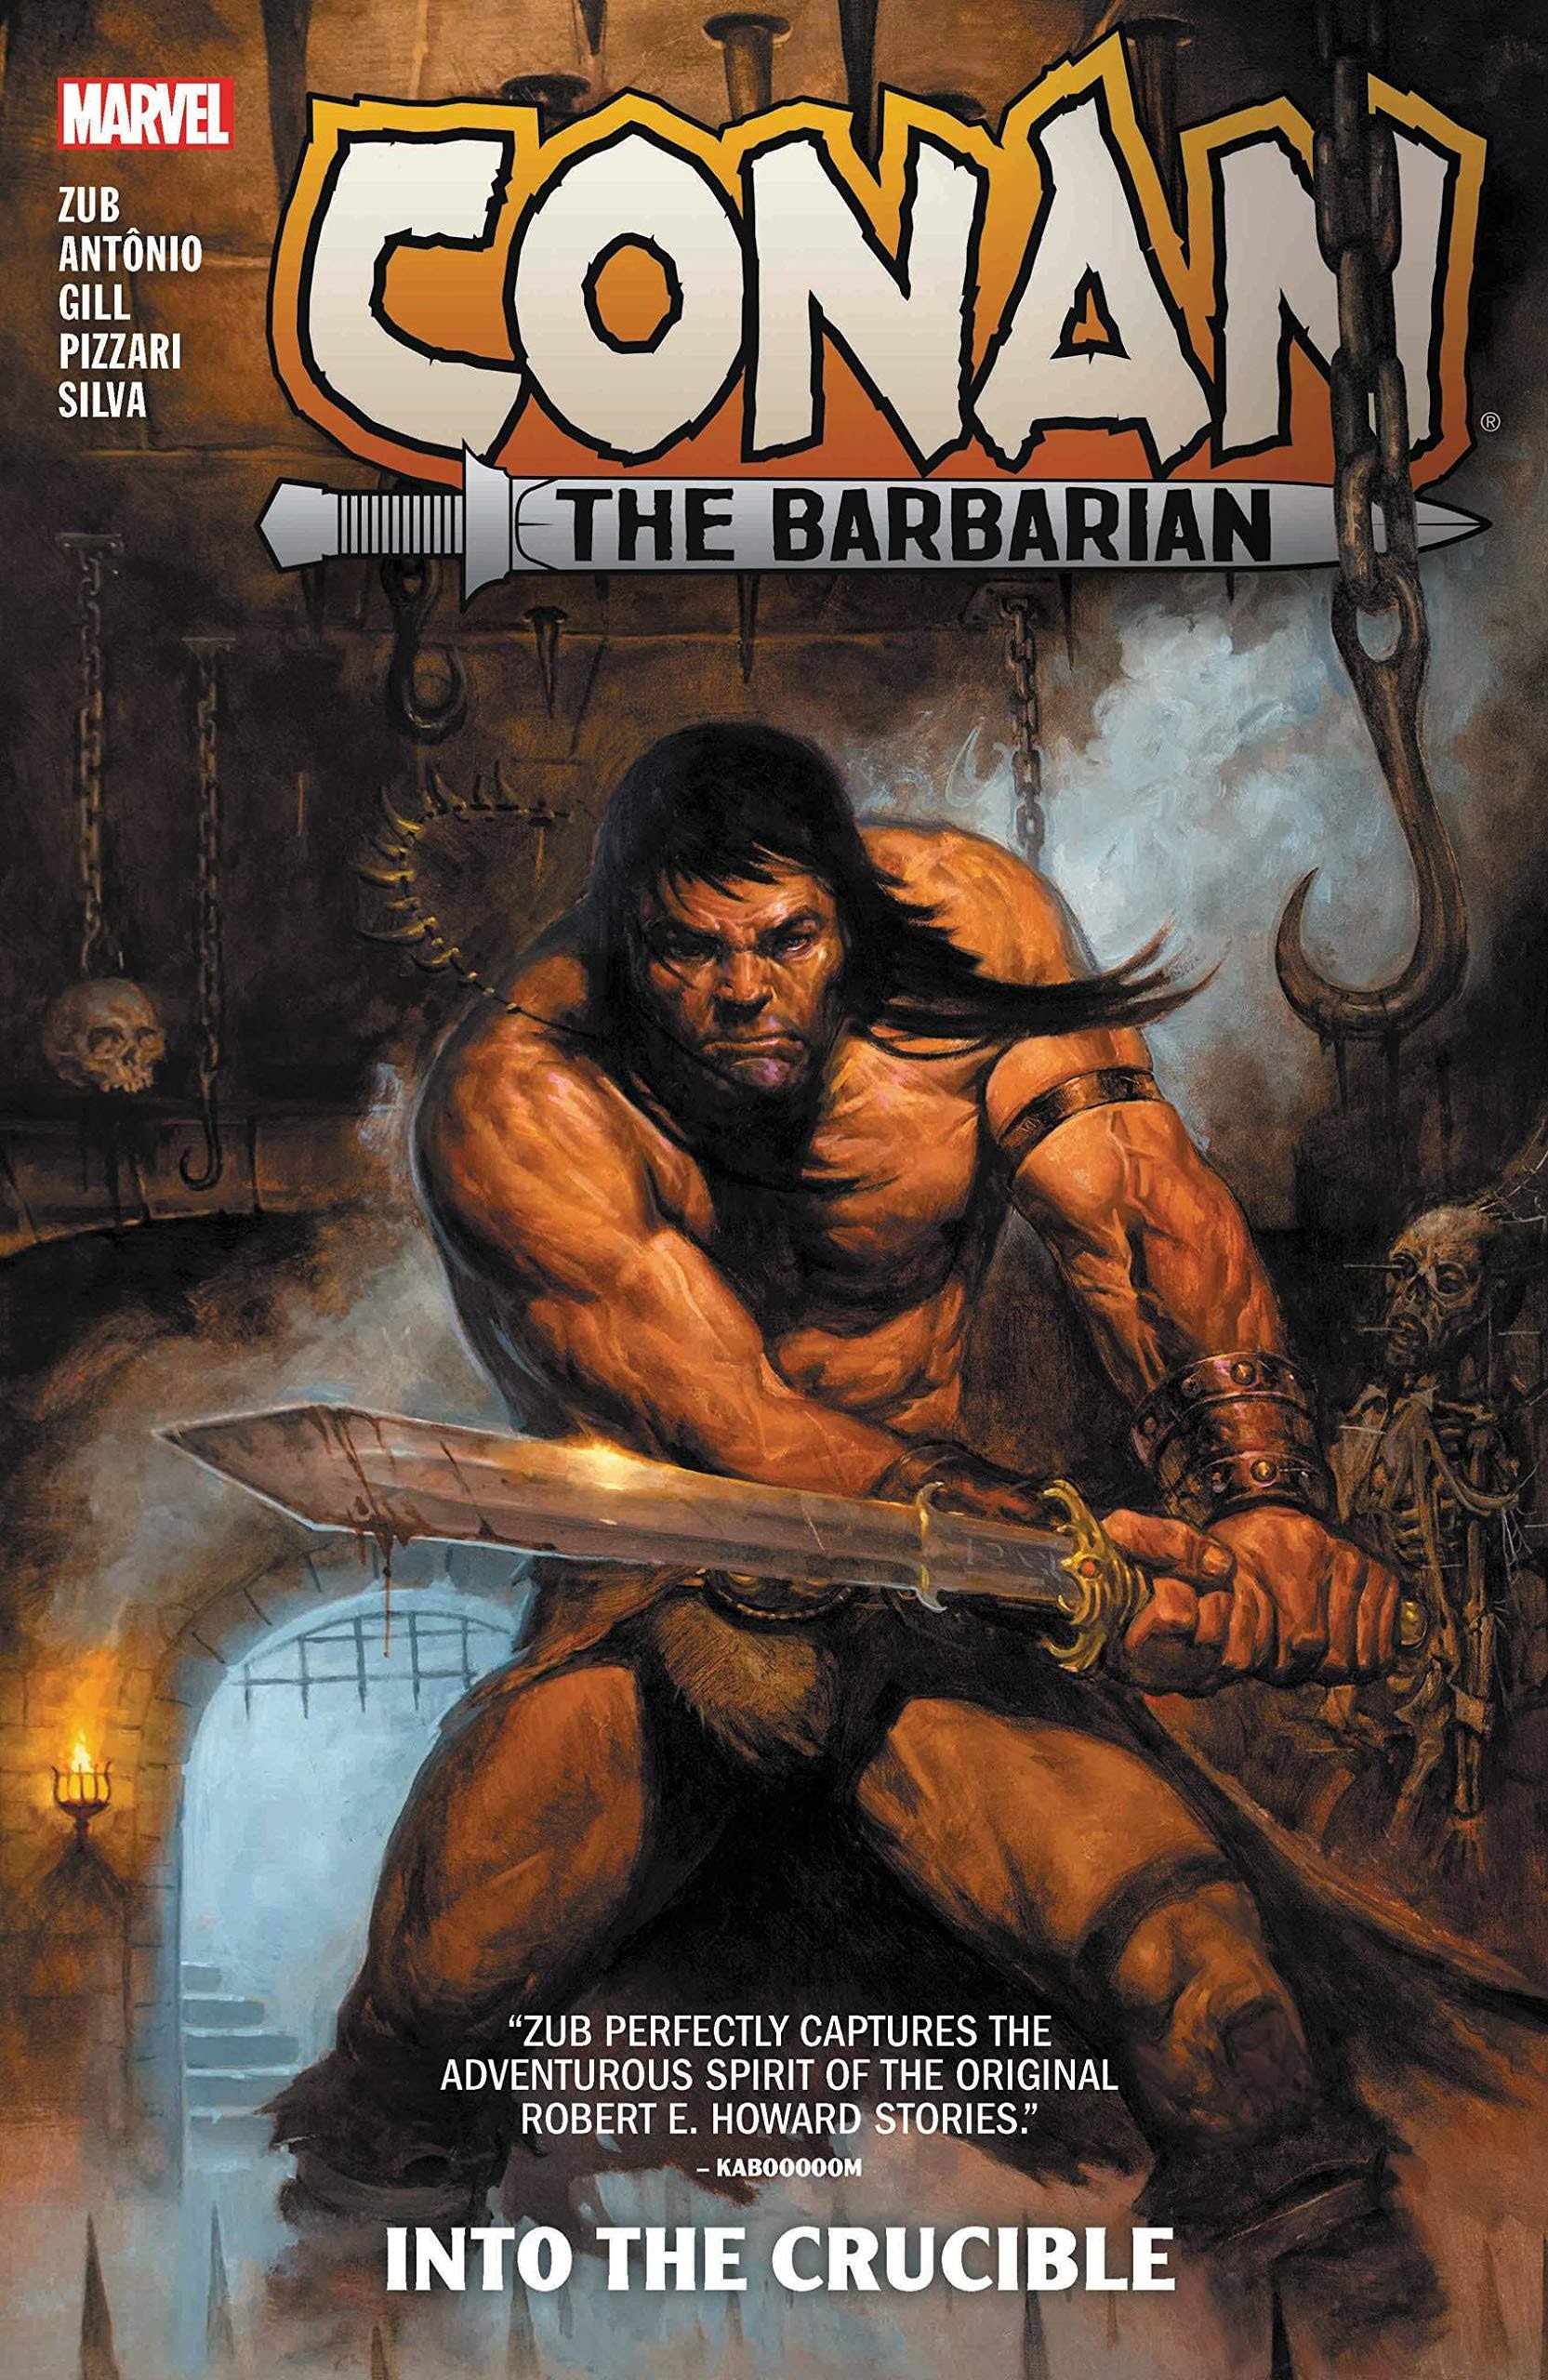 Conan the Barbarian by Jim Zub Vol. 1: Into the Crucible [Book]